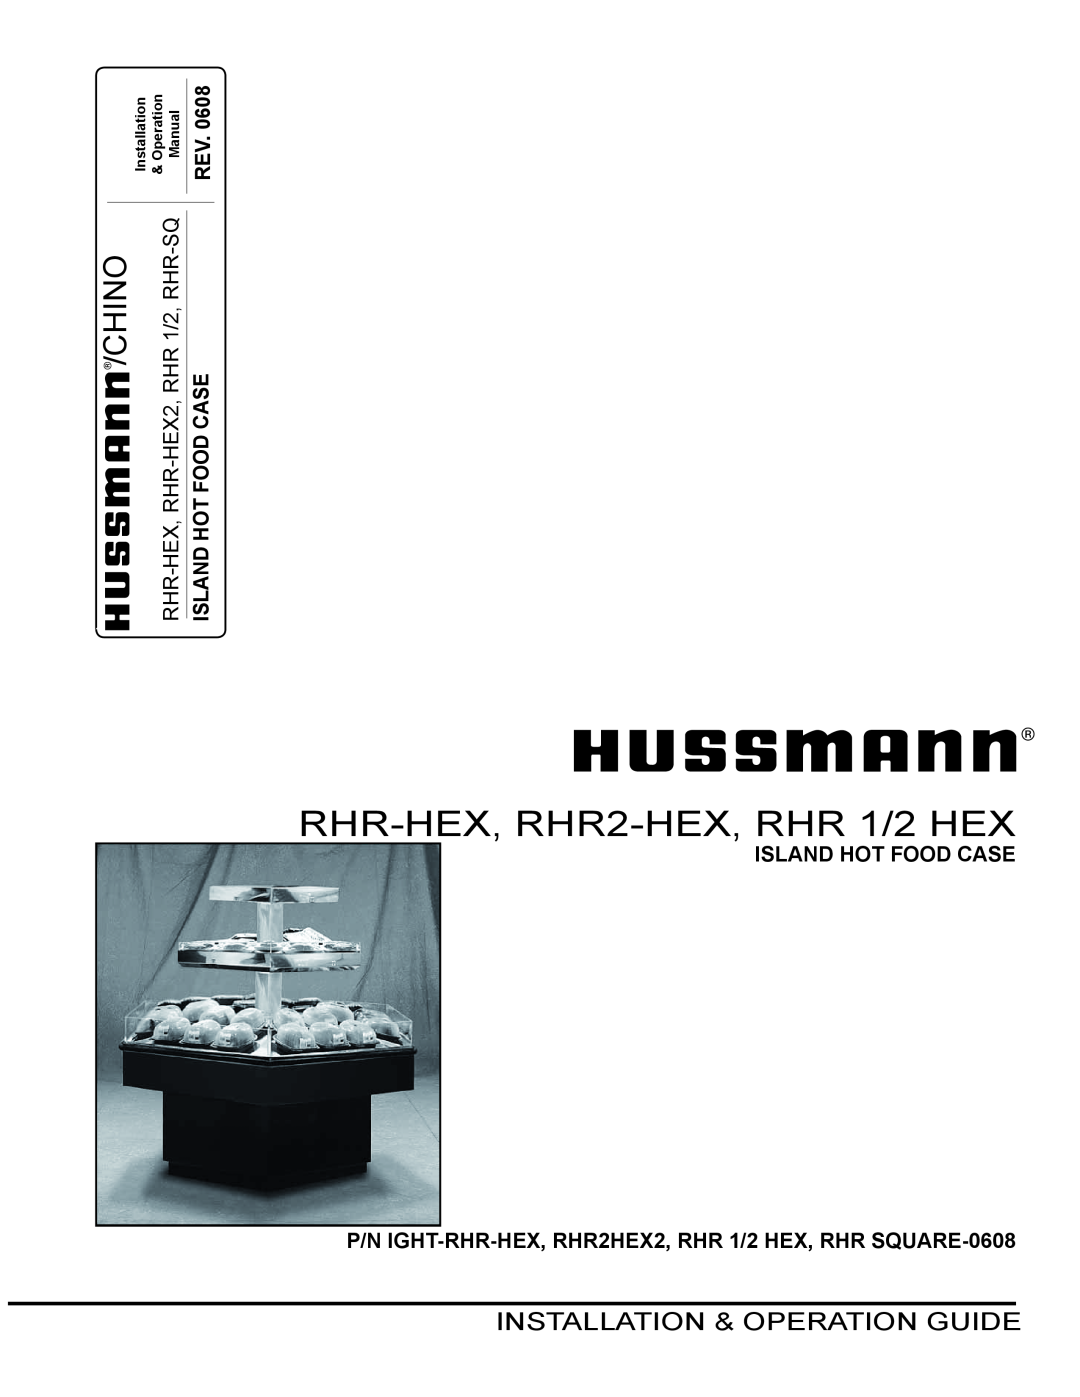 hussman RHR-SQ operation manual Chino, Island Hot Food Case, Rev, Island hot food case, RHR-HEX, RHR2-HEX,RHR 1/2 HEX 